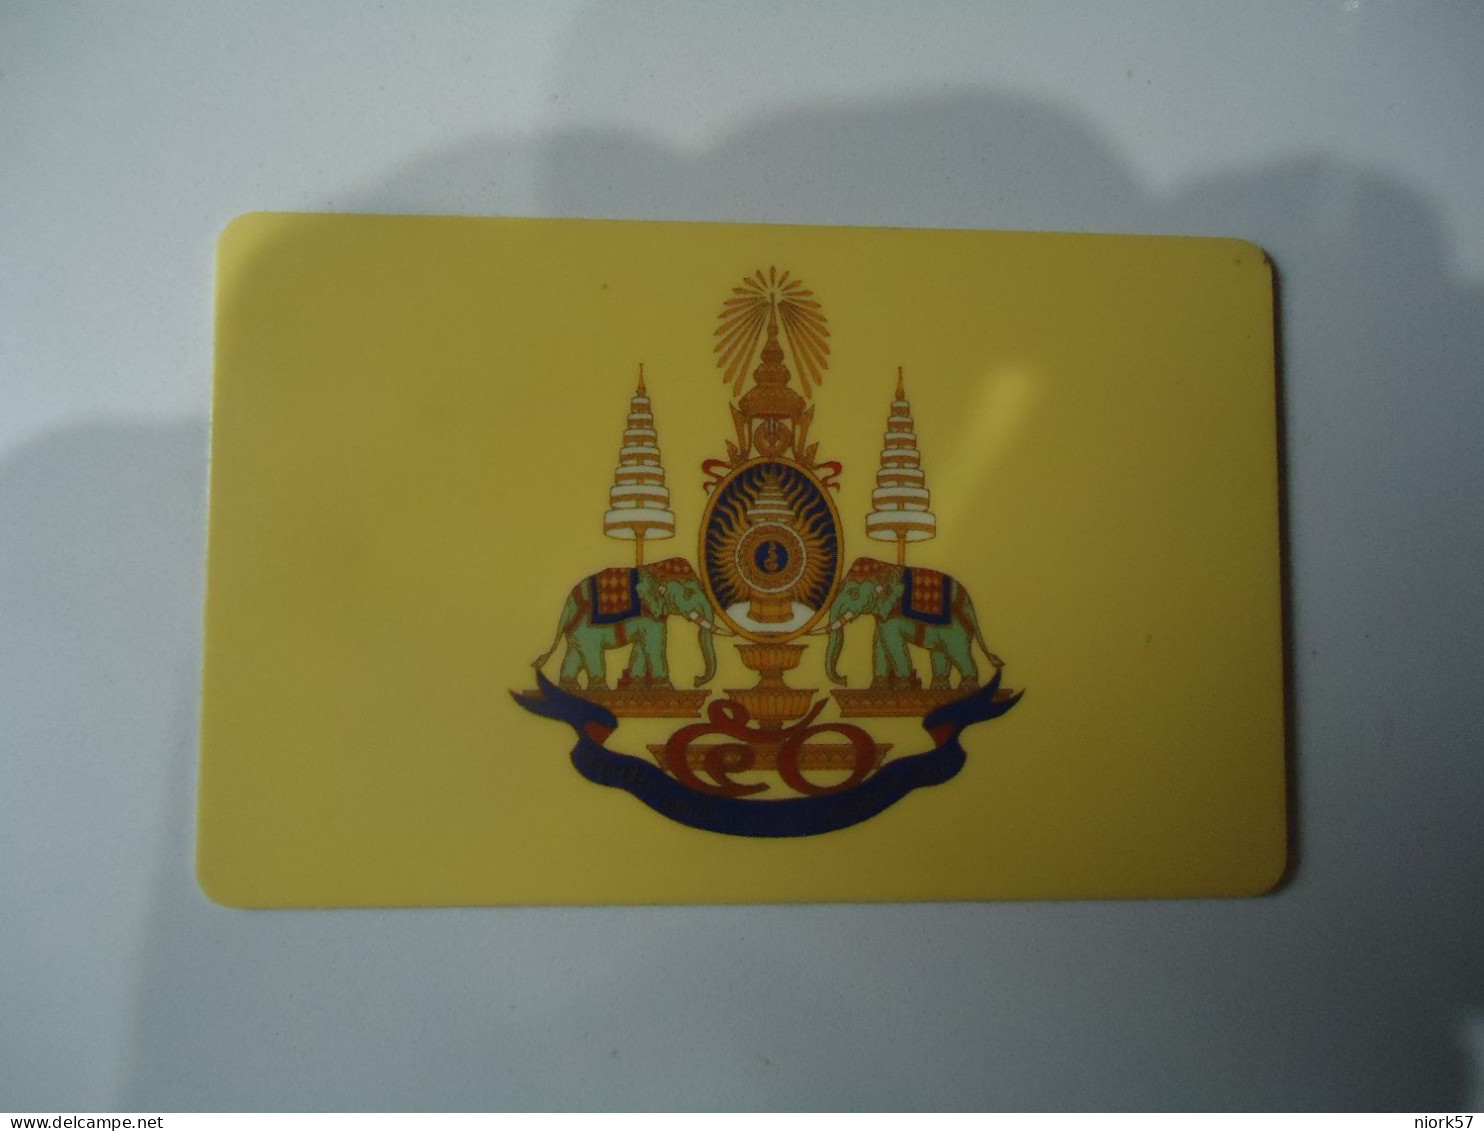 THAILAND USED CARD PIN 108 - UNIT 300 RR   COD OO4 - Thaïland